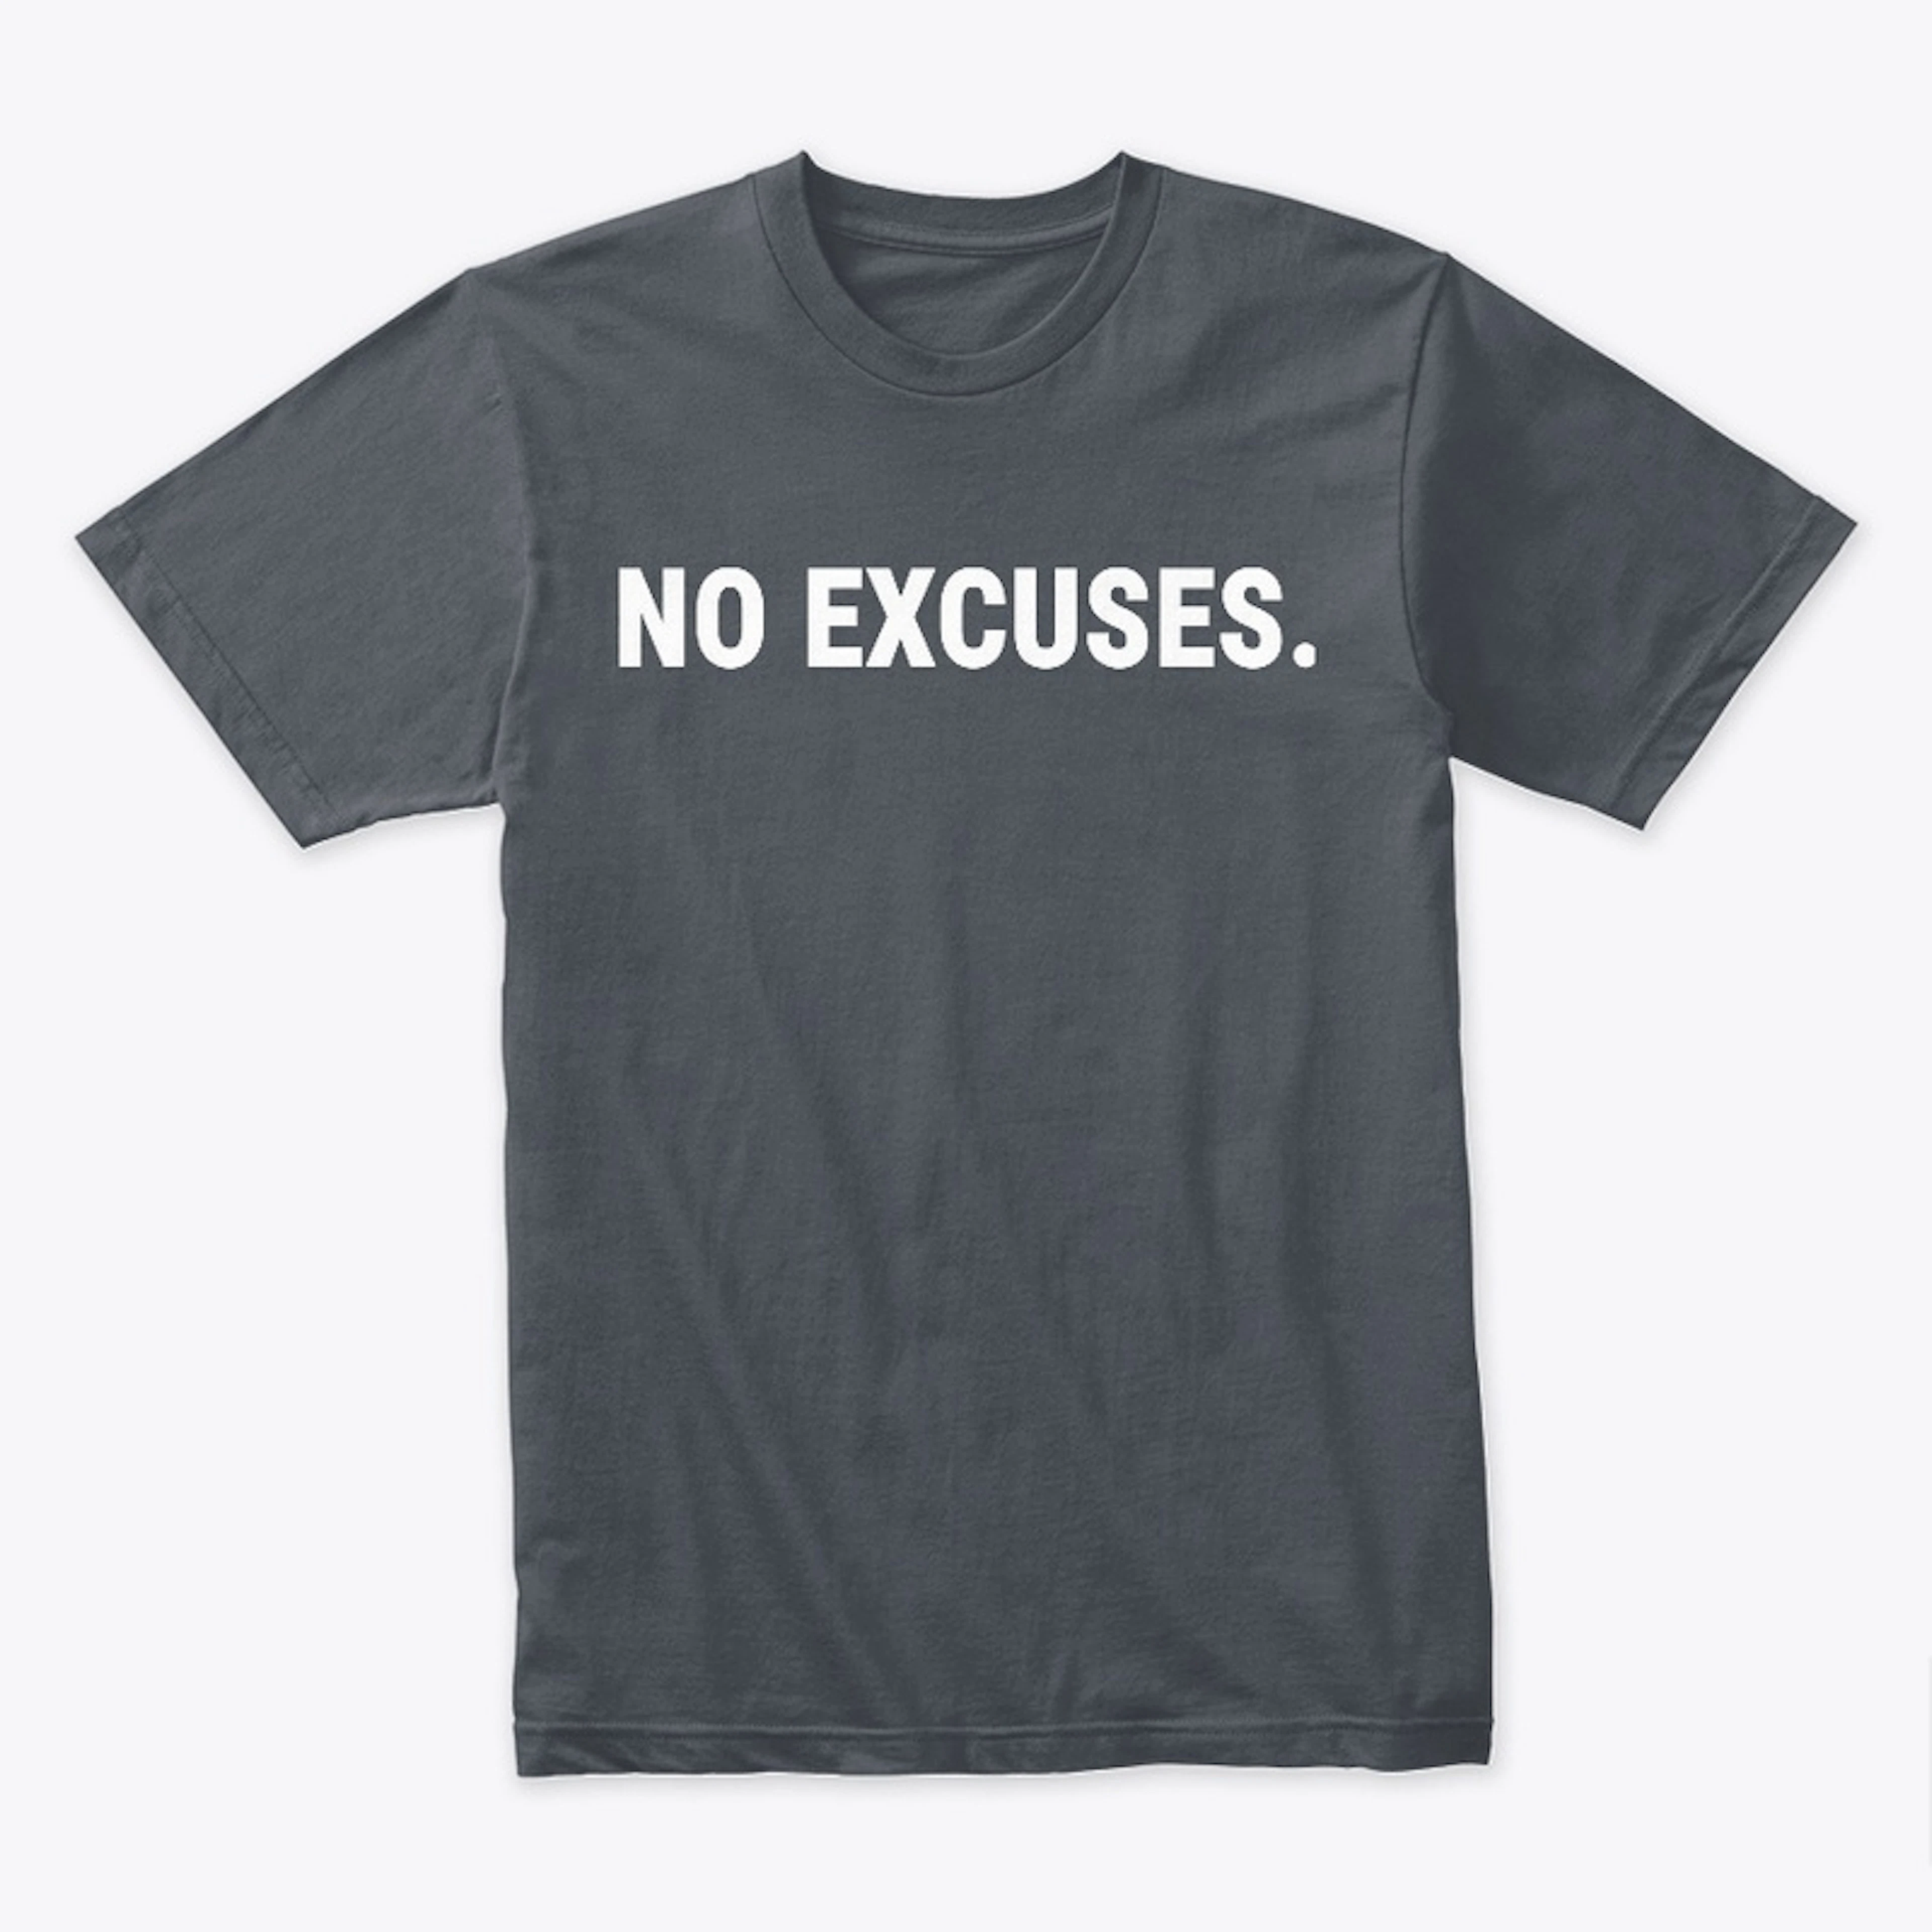 No Excuses.